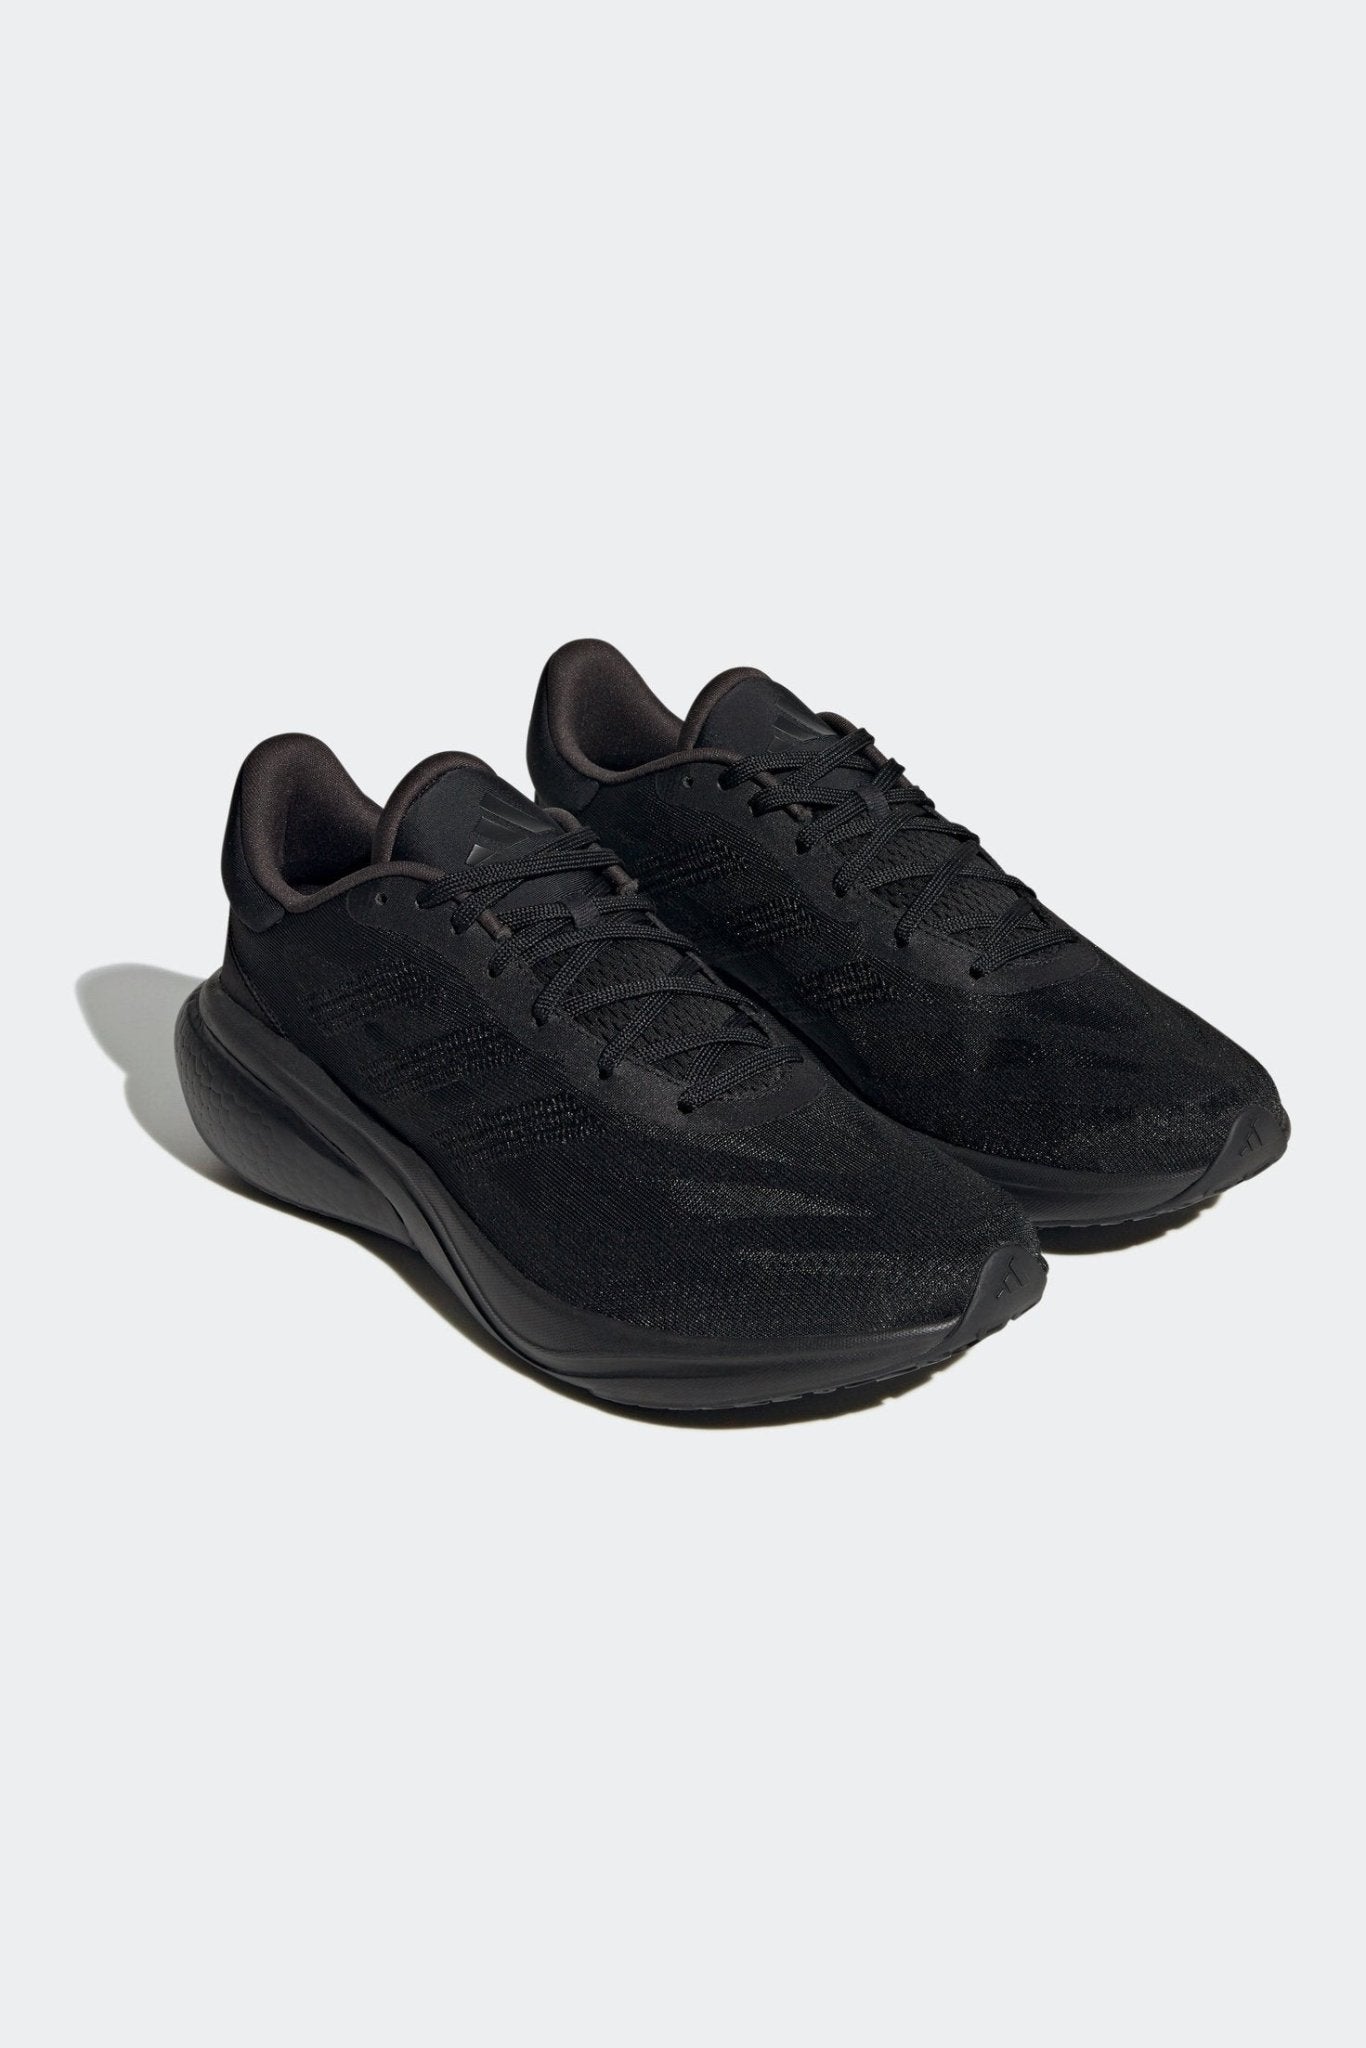 ADIDAS - נעלי ריצה לגבר SUPERNOVA 3 בצבע שחור - MASHBIR//365